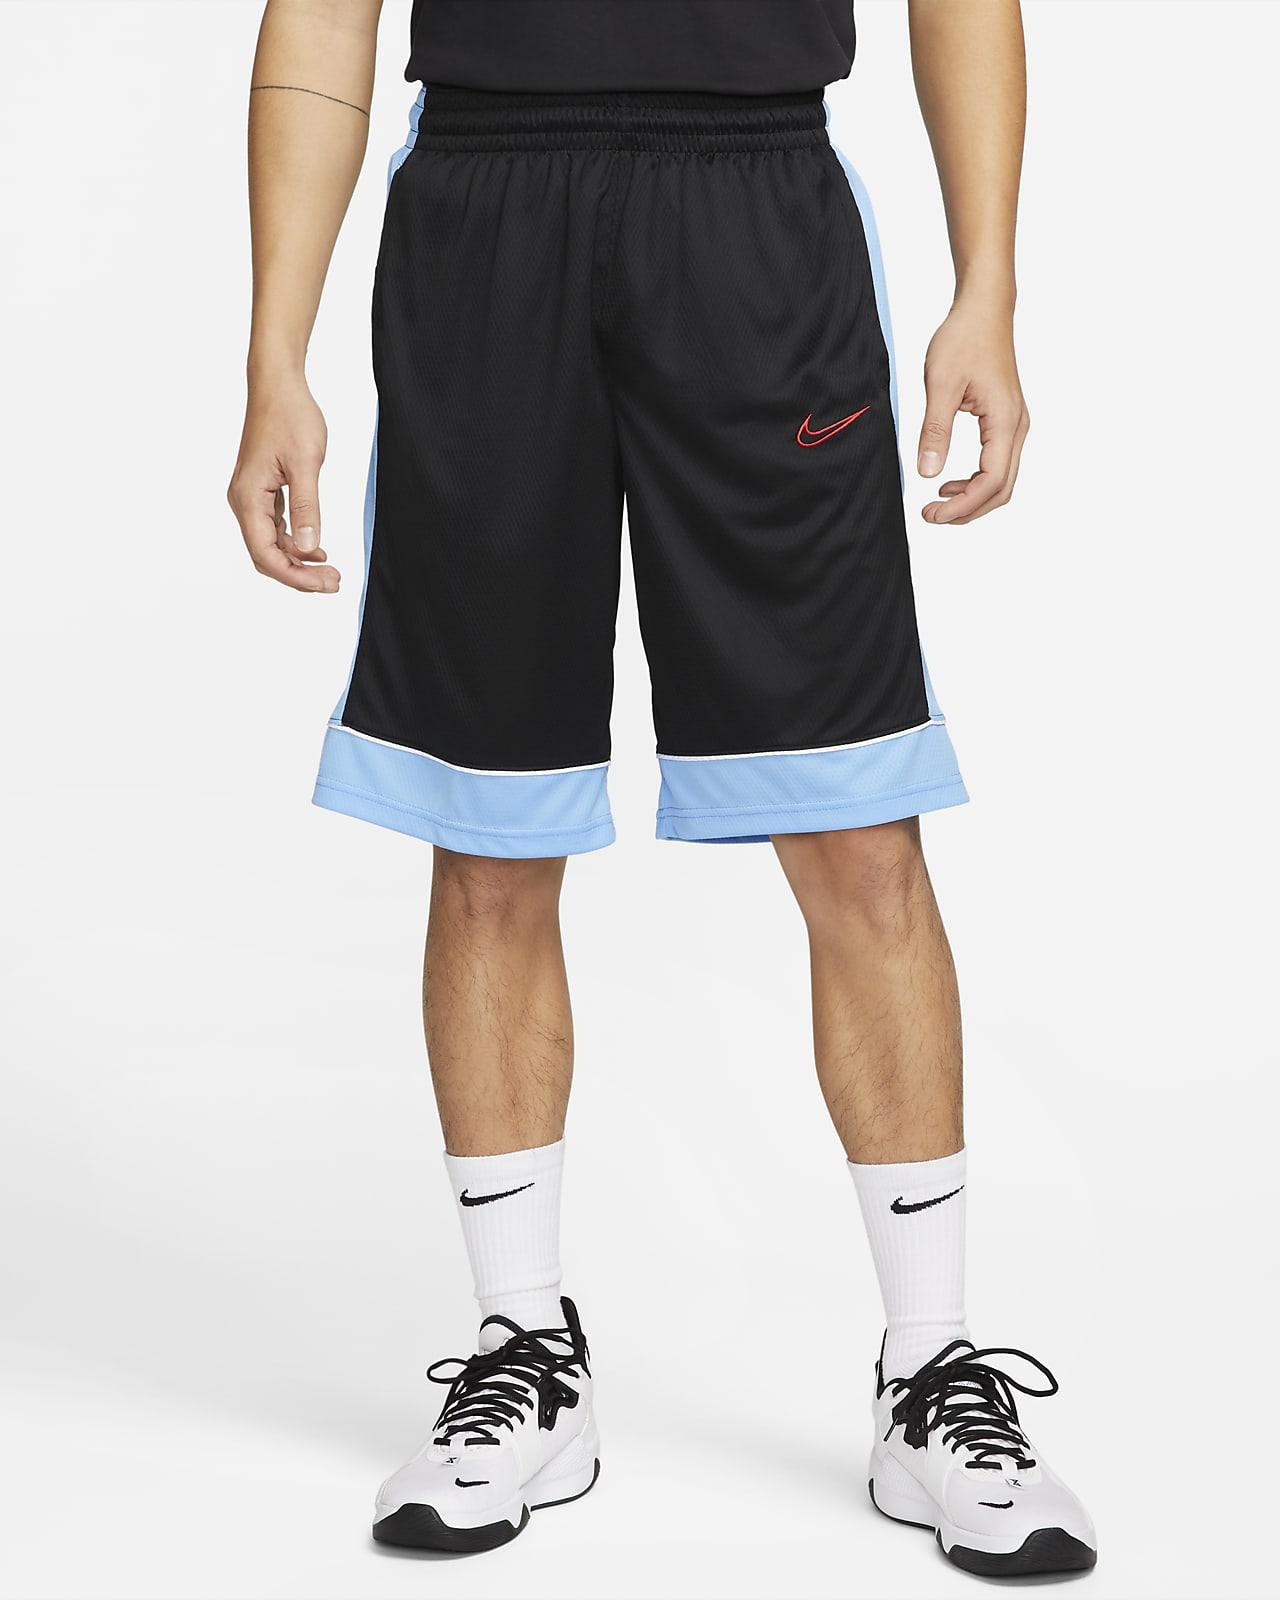 Adidas Basketball Shorts Mens Cheapest Collection, Save 50% | jlcatj.gob.mx